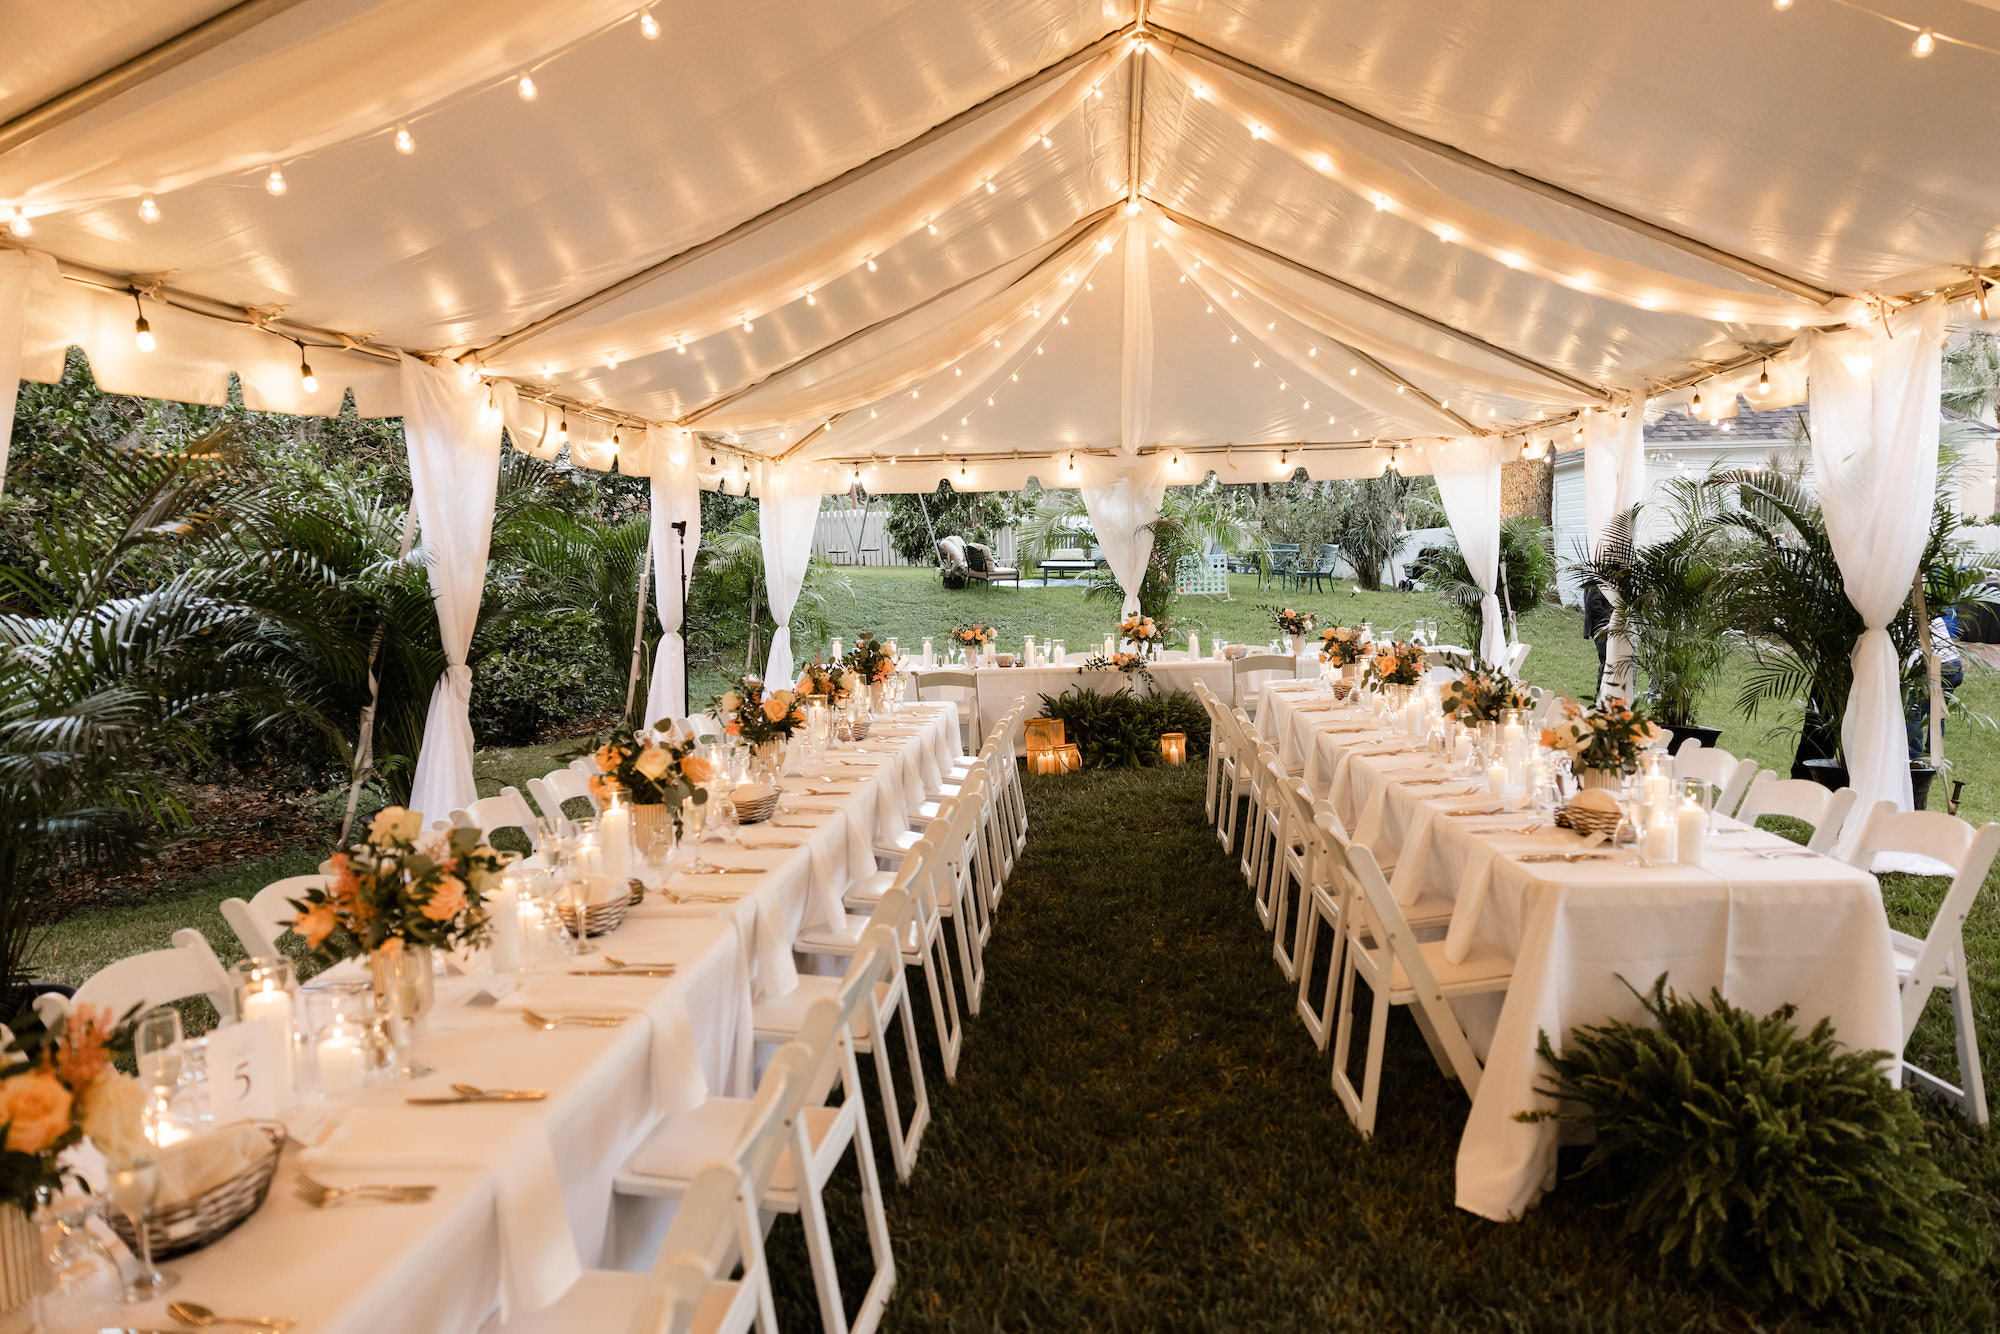 White Tent with Drapery | White Backyard Wedding Reception Ideas